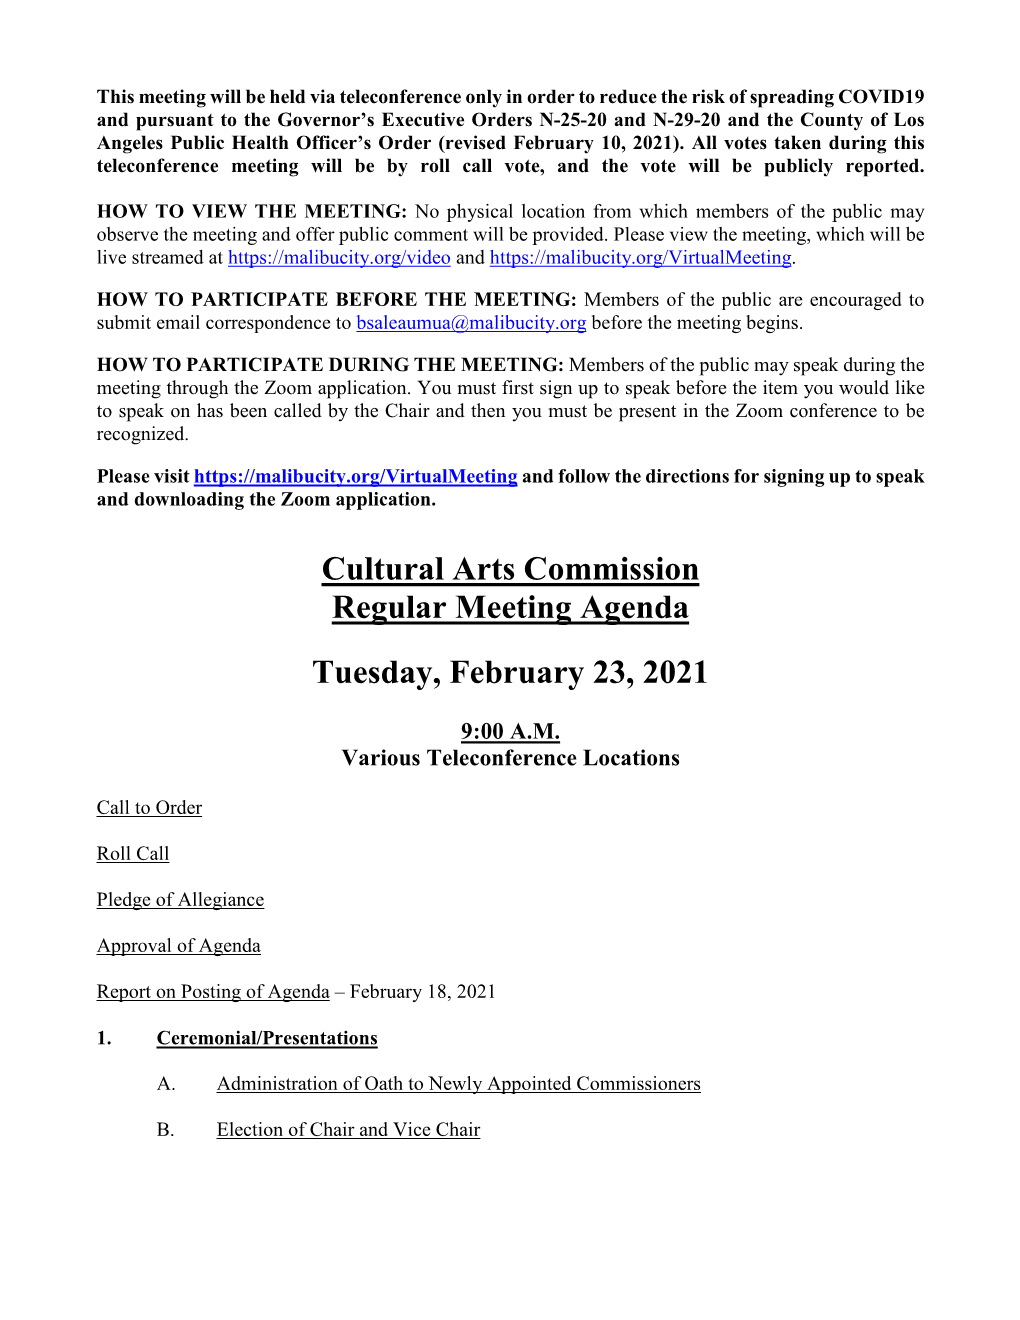 February 23, 2021 Regular Meeting